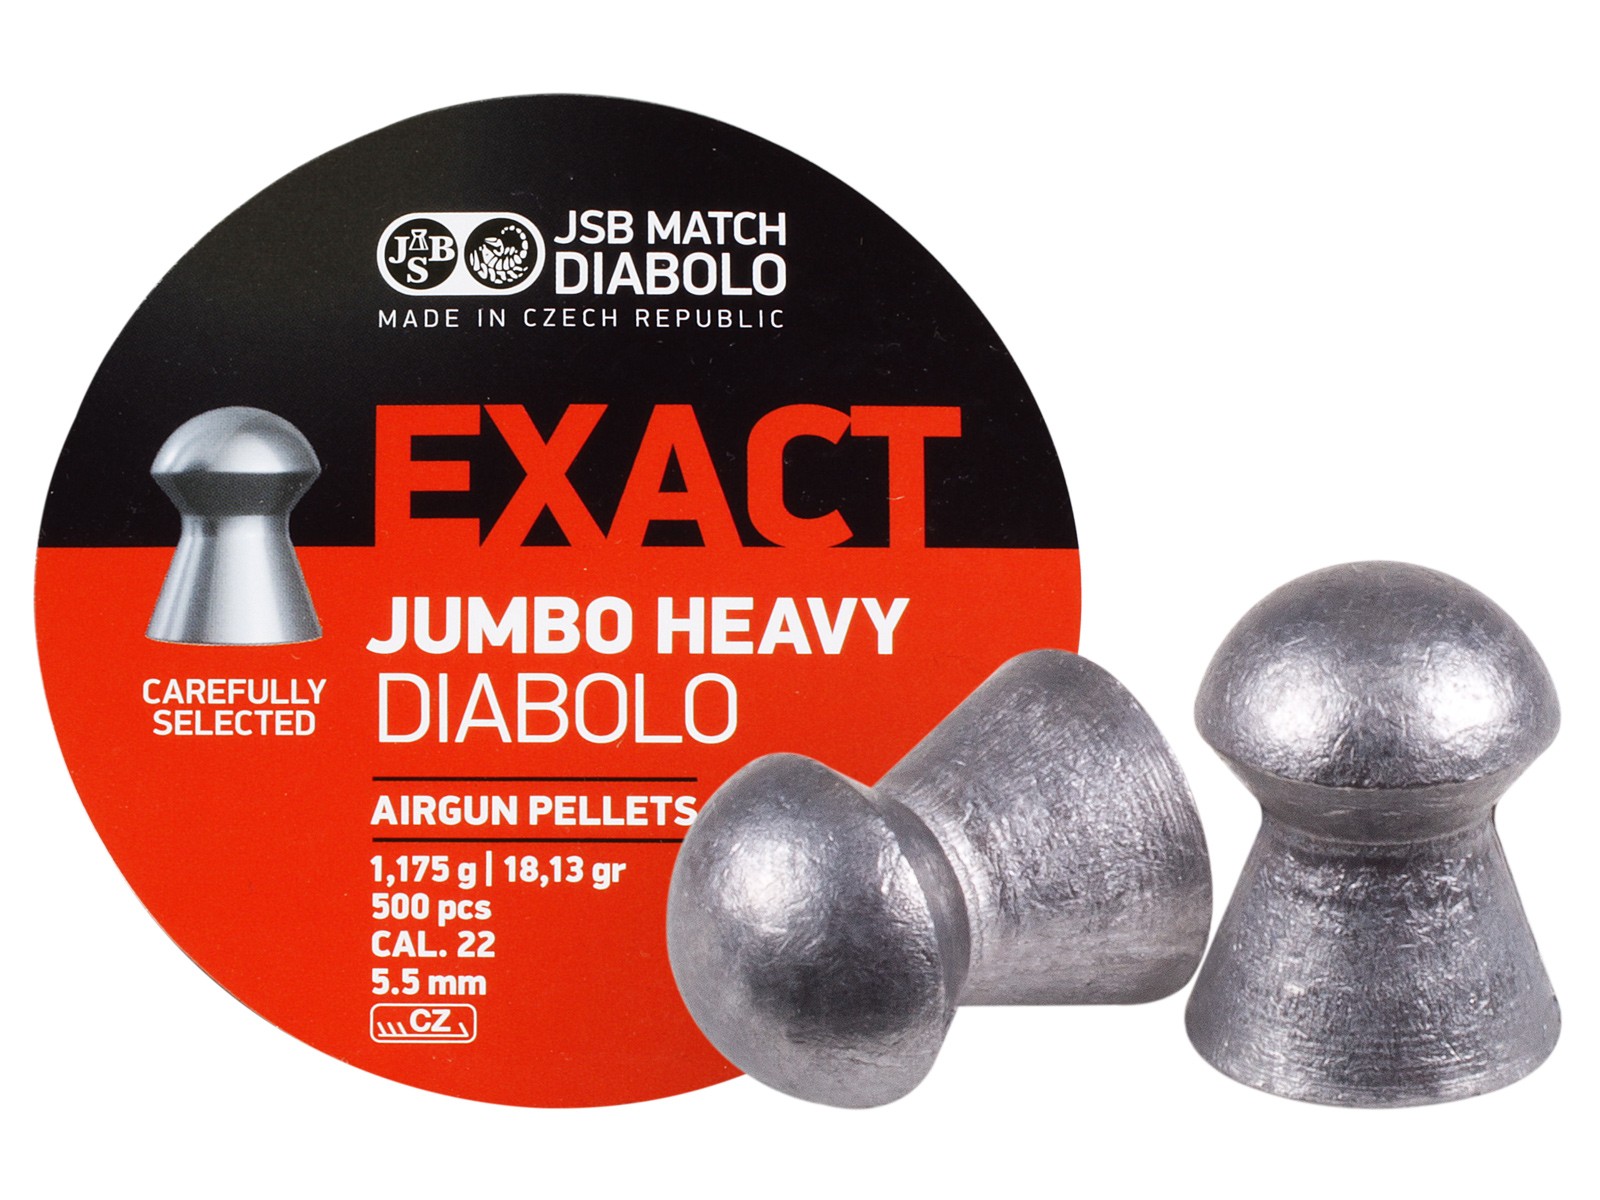 JSB Match Diabolo Exact Jumbo Heavy .22 Cal, 18.13 Grains, Domed, 500ct 0.22